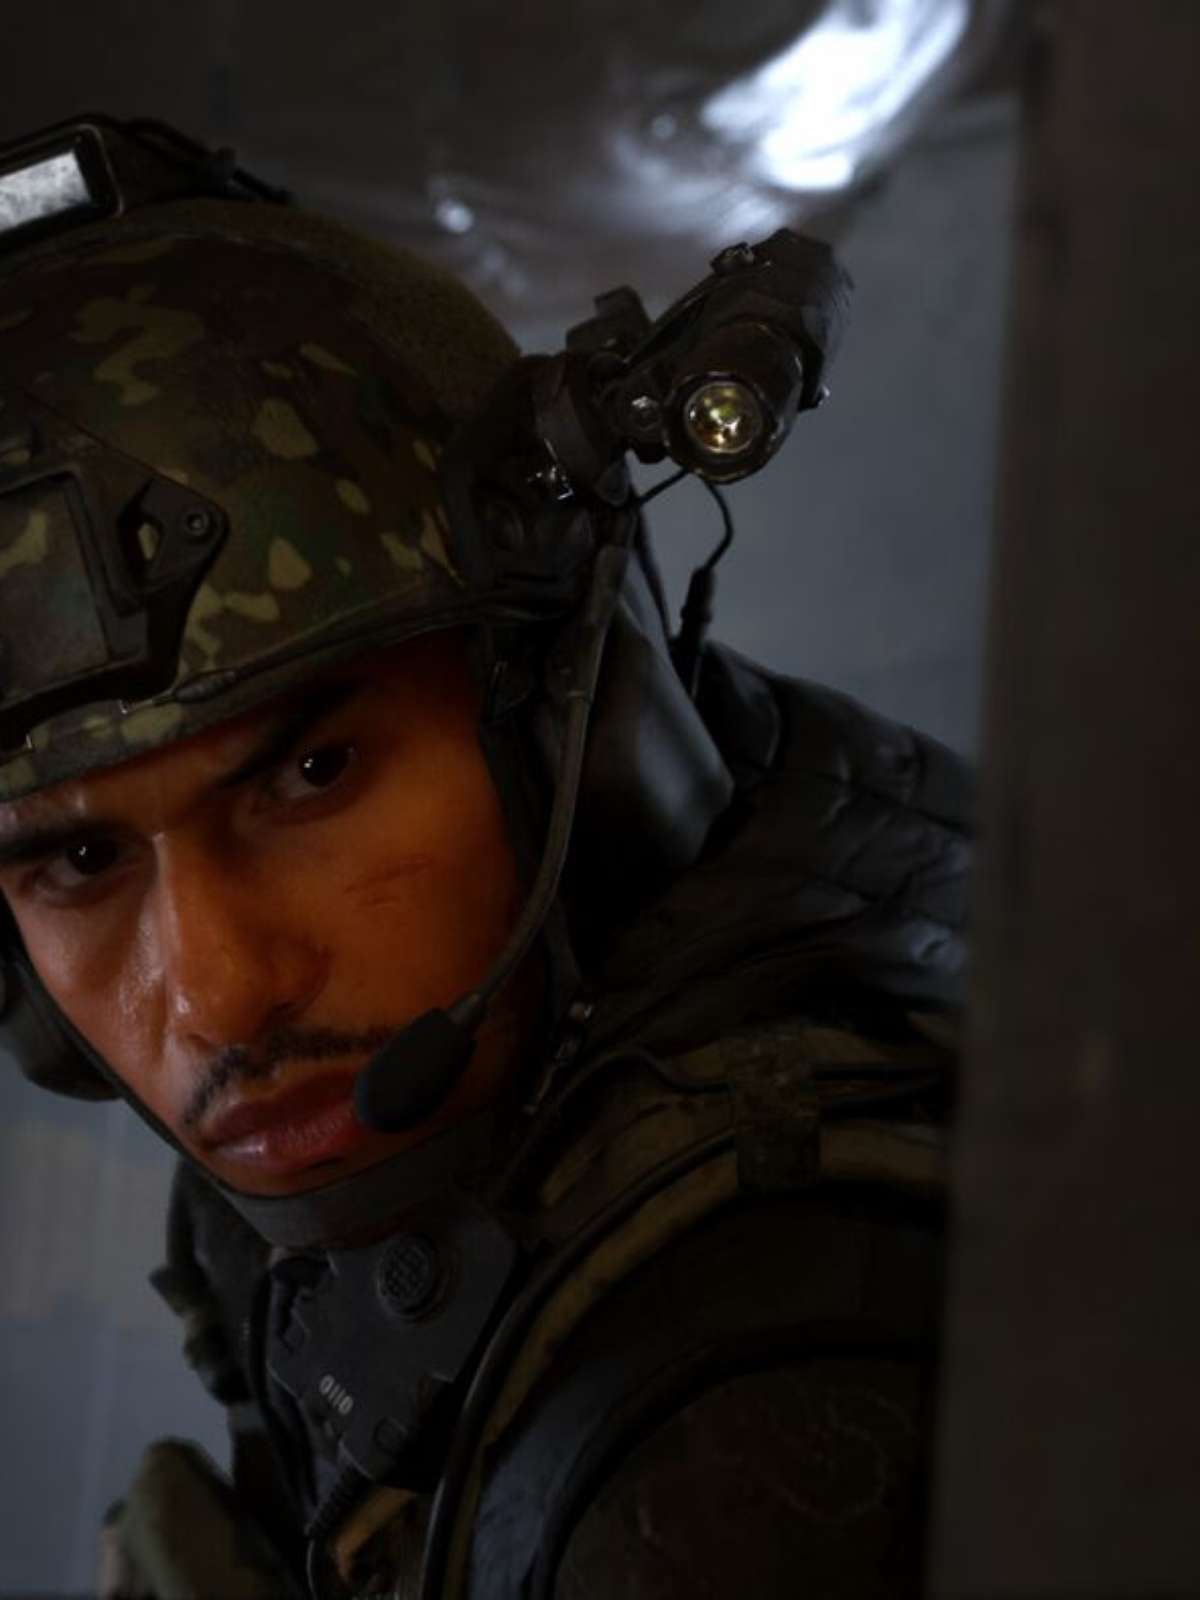 Call of Duty Modern Warfare 2  7 dicas para subir de nível rapidamente -  Canaltech